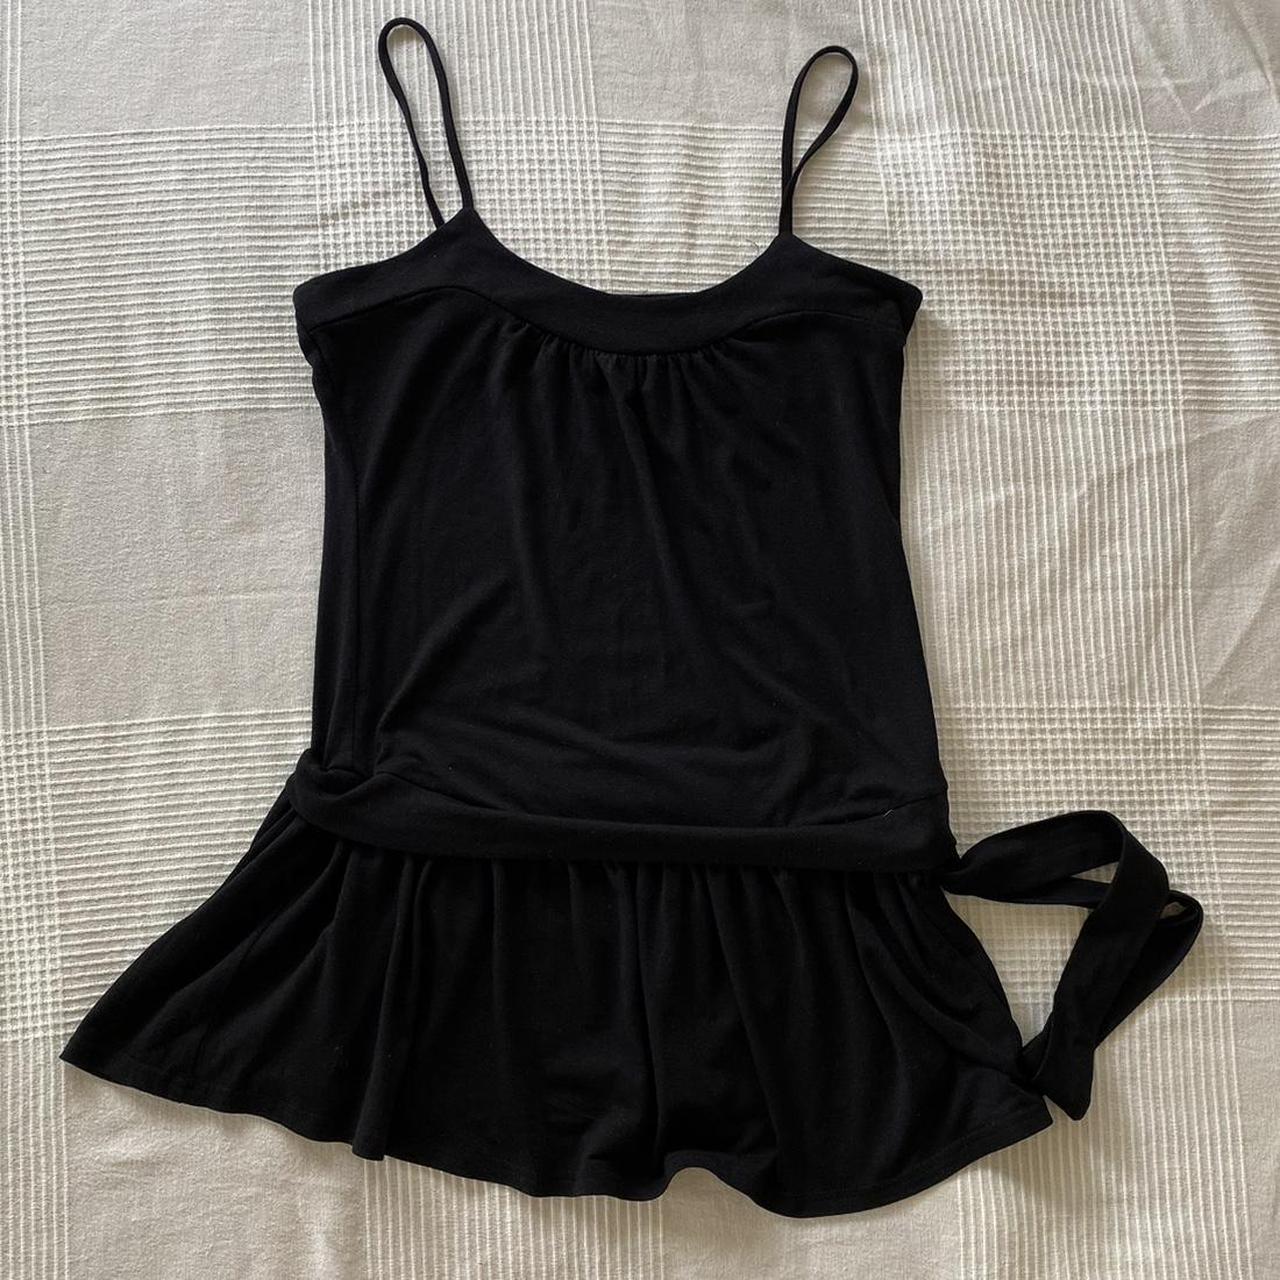 Black drop waist mini dress / long line top with... - Depop